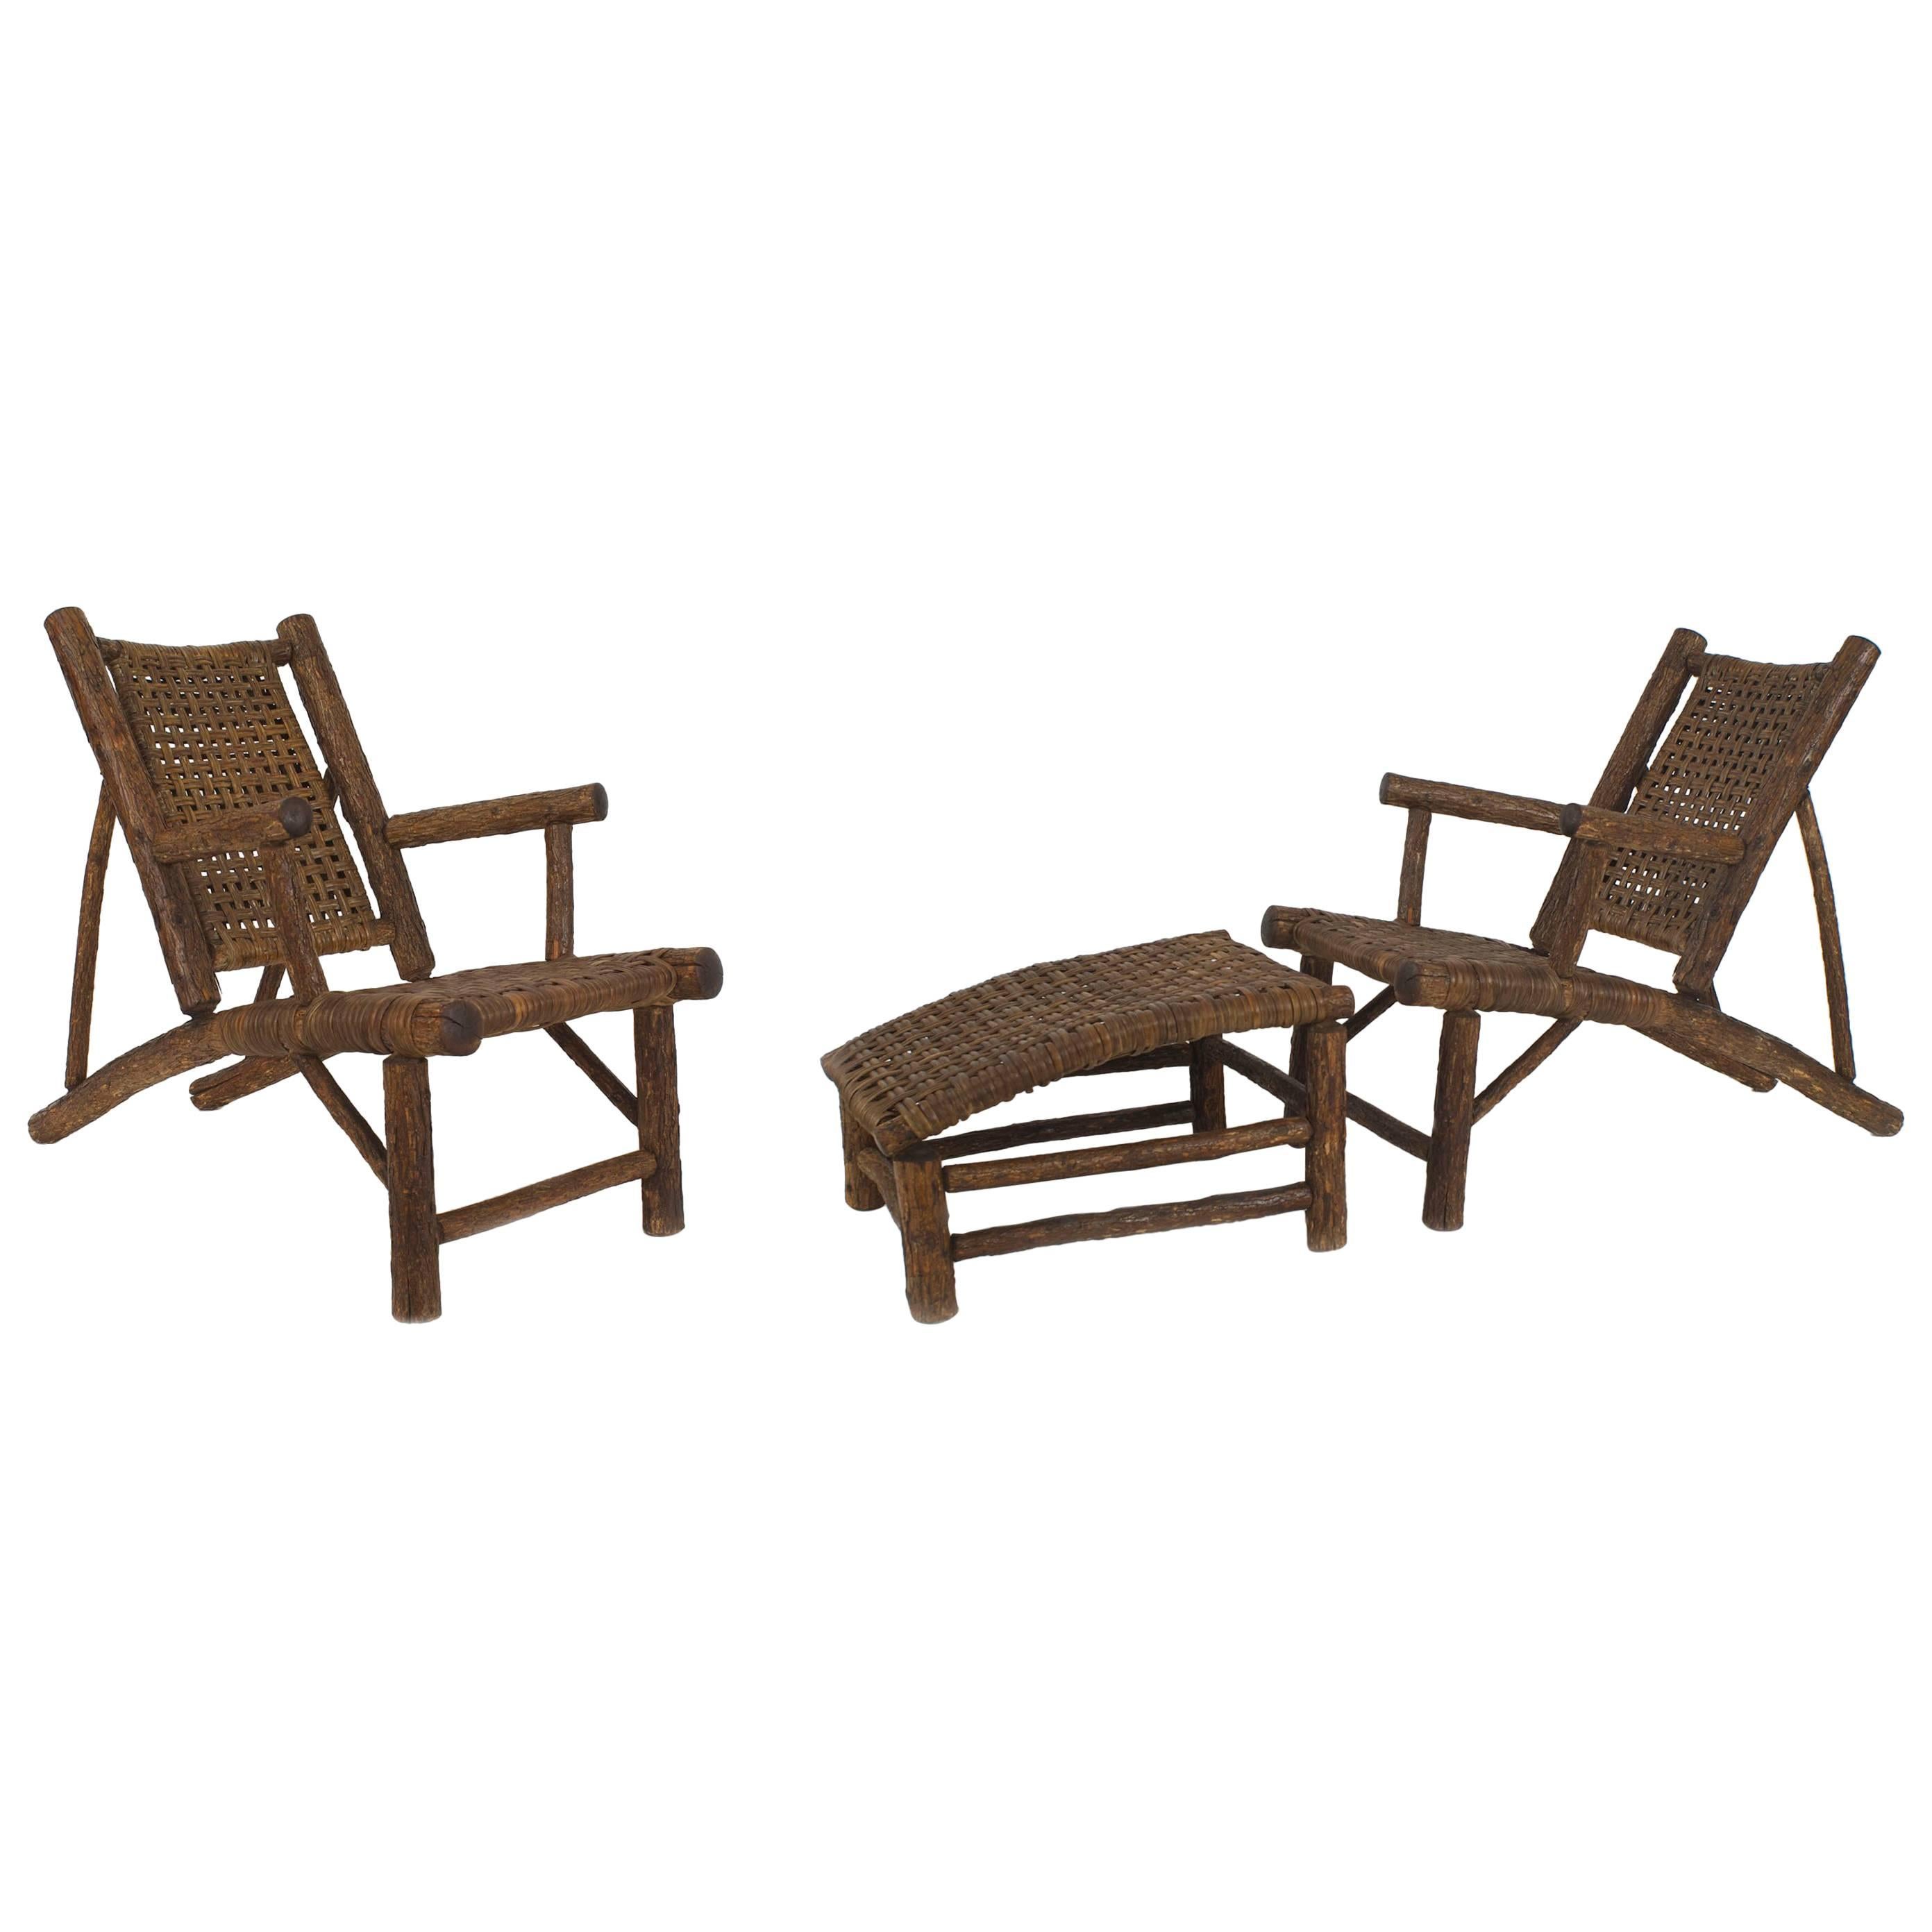 Ein Paar niedrige Sessel aus altem Hickory-Holz